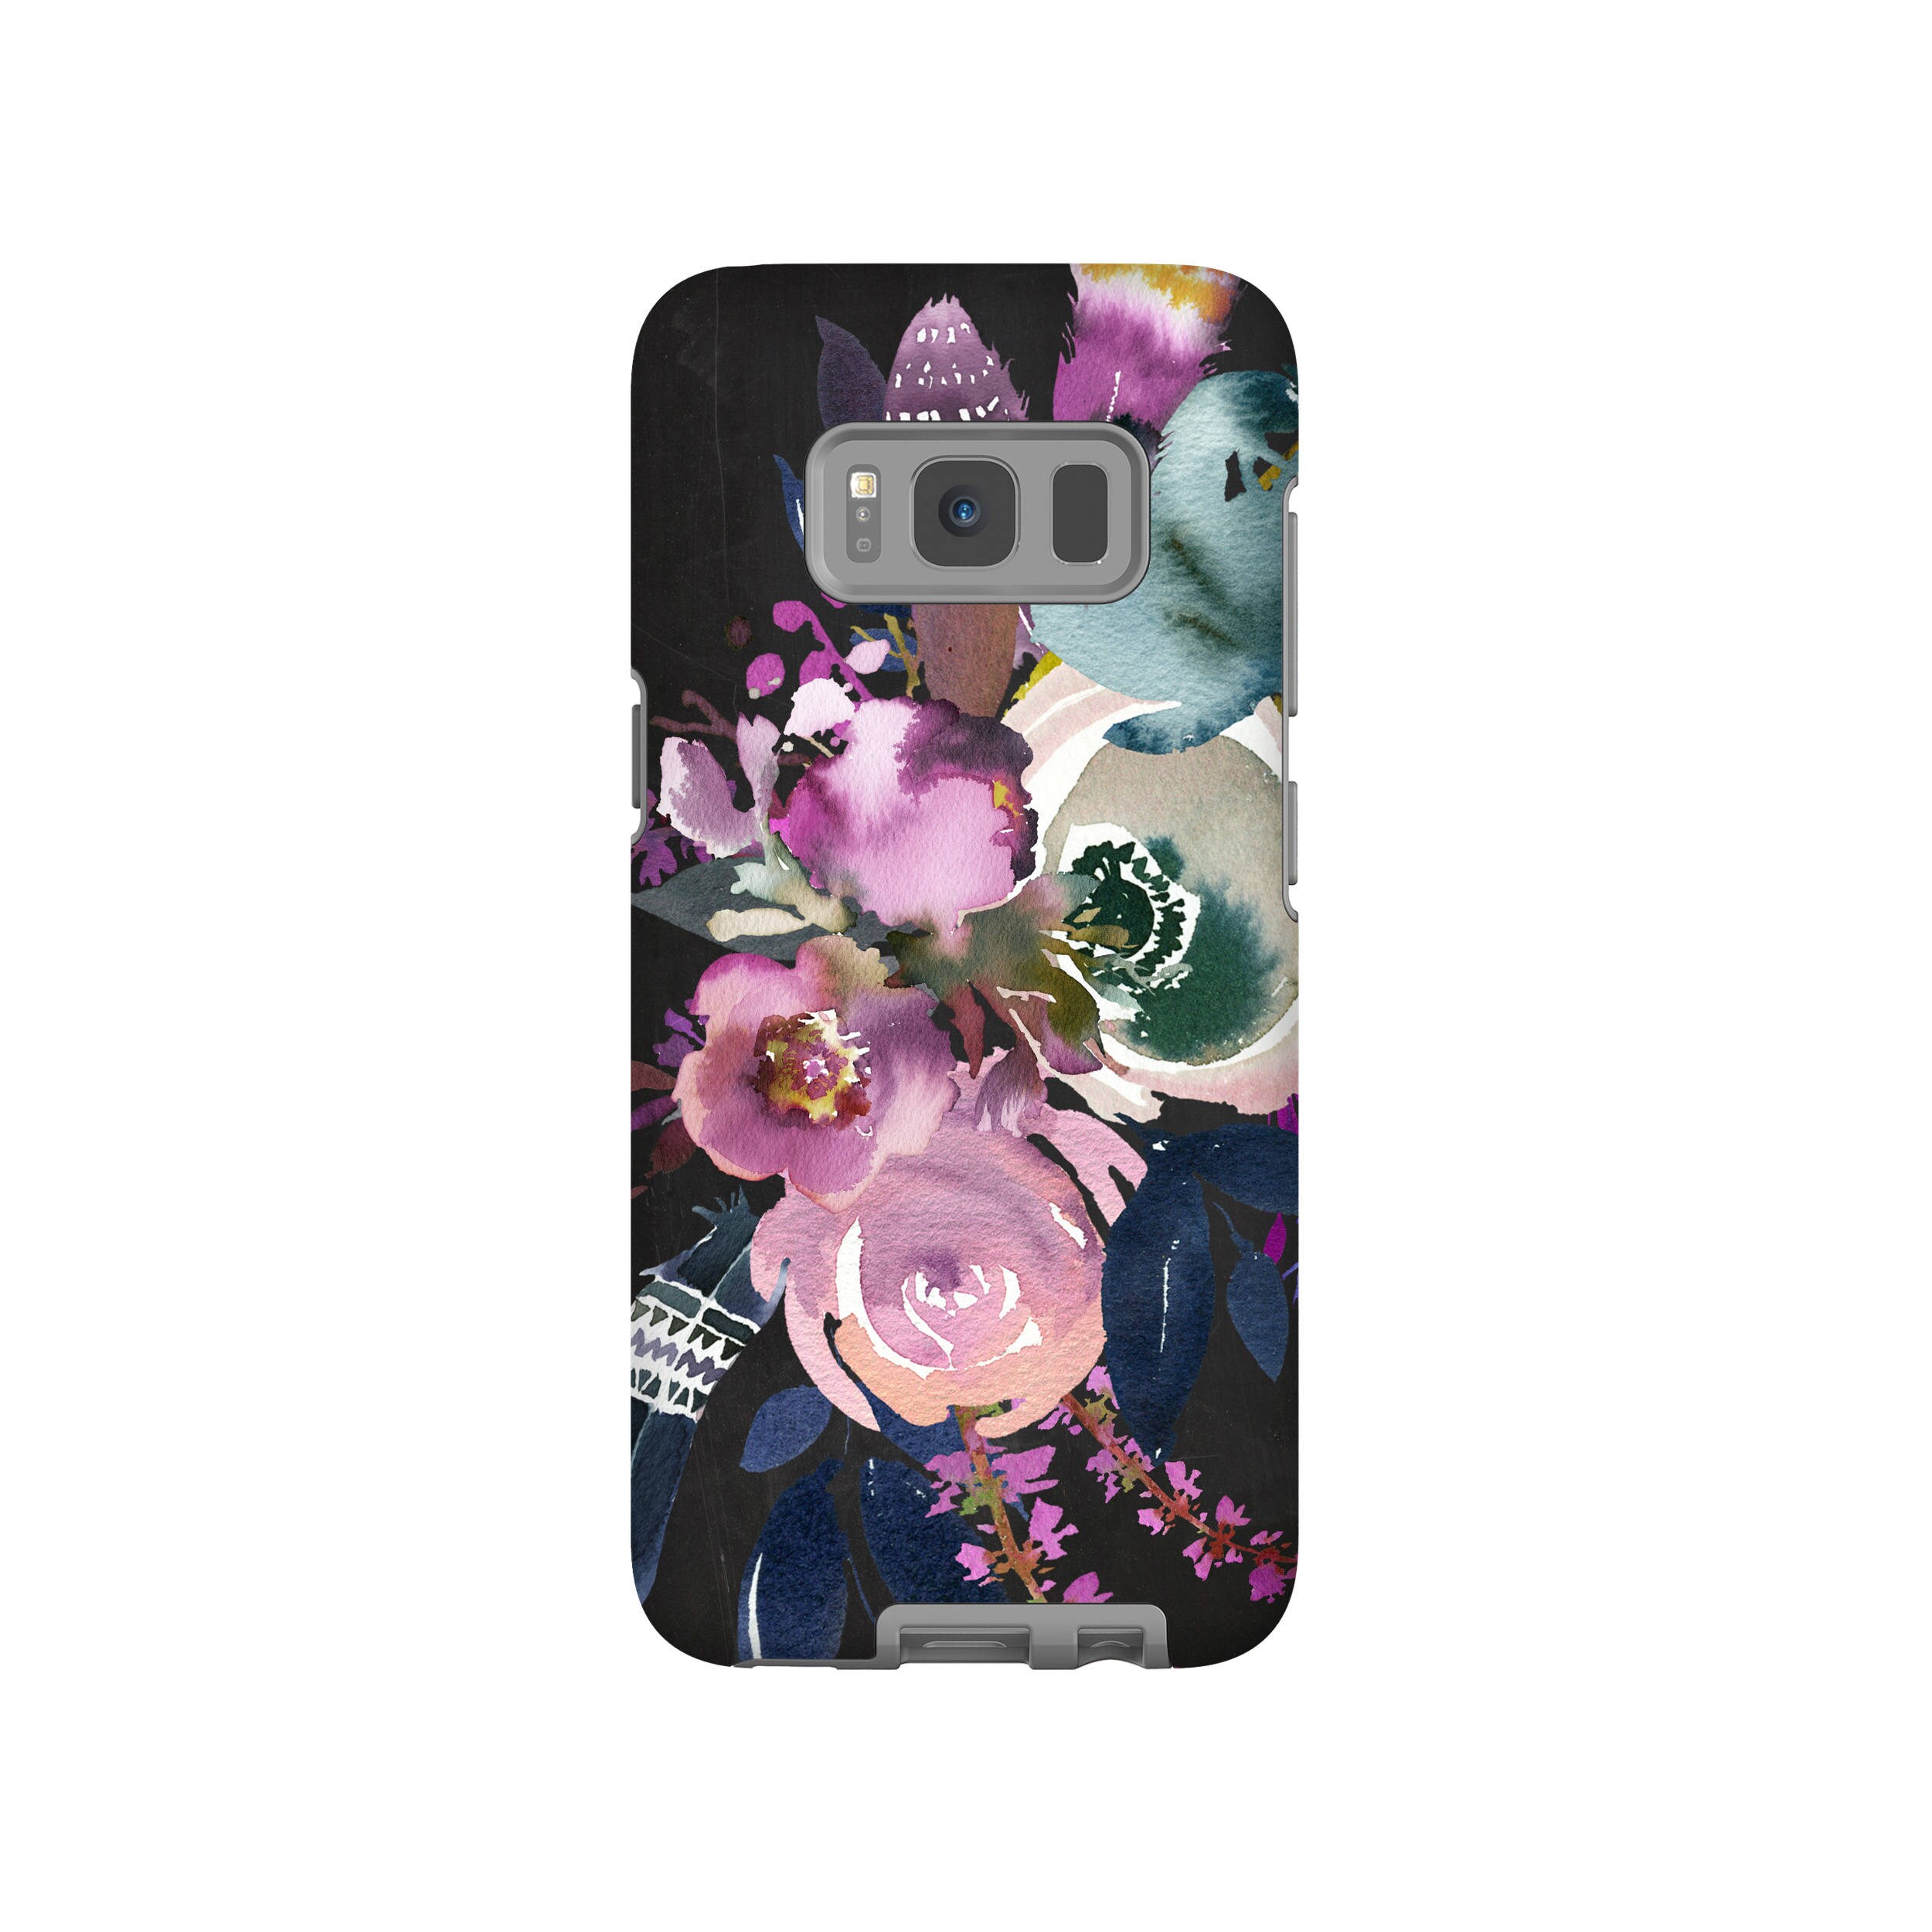 Flower Phone Case Boho Feather Rustic Chalkboard iPhone 8 | Etsy